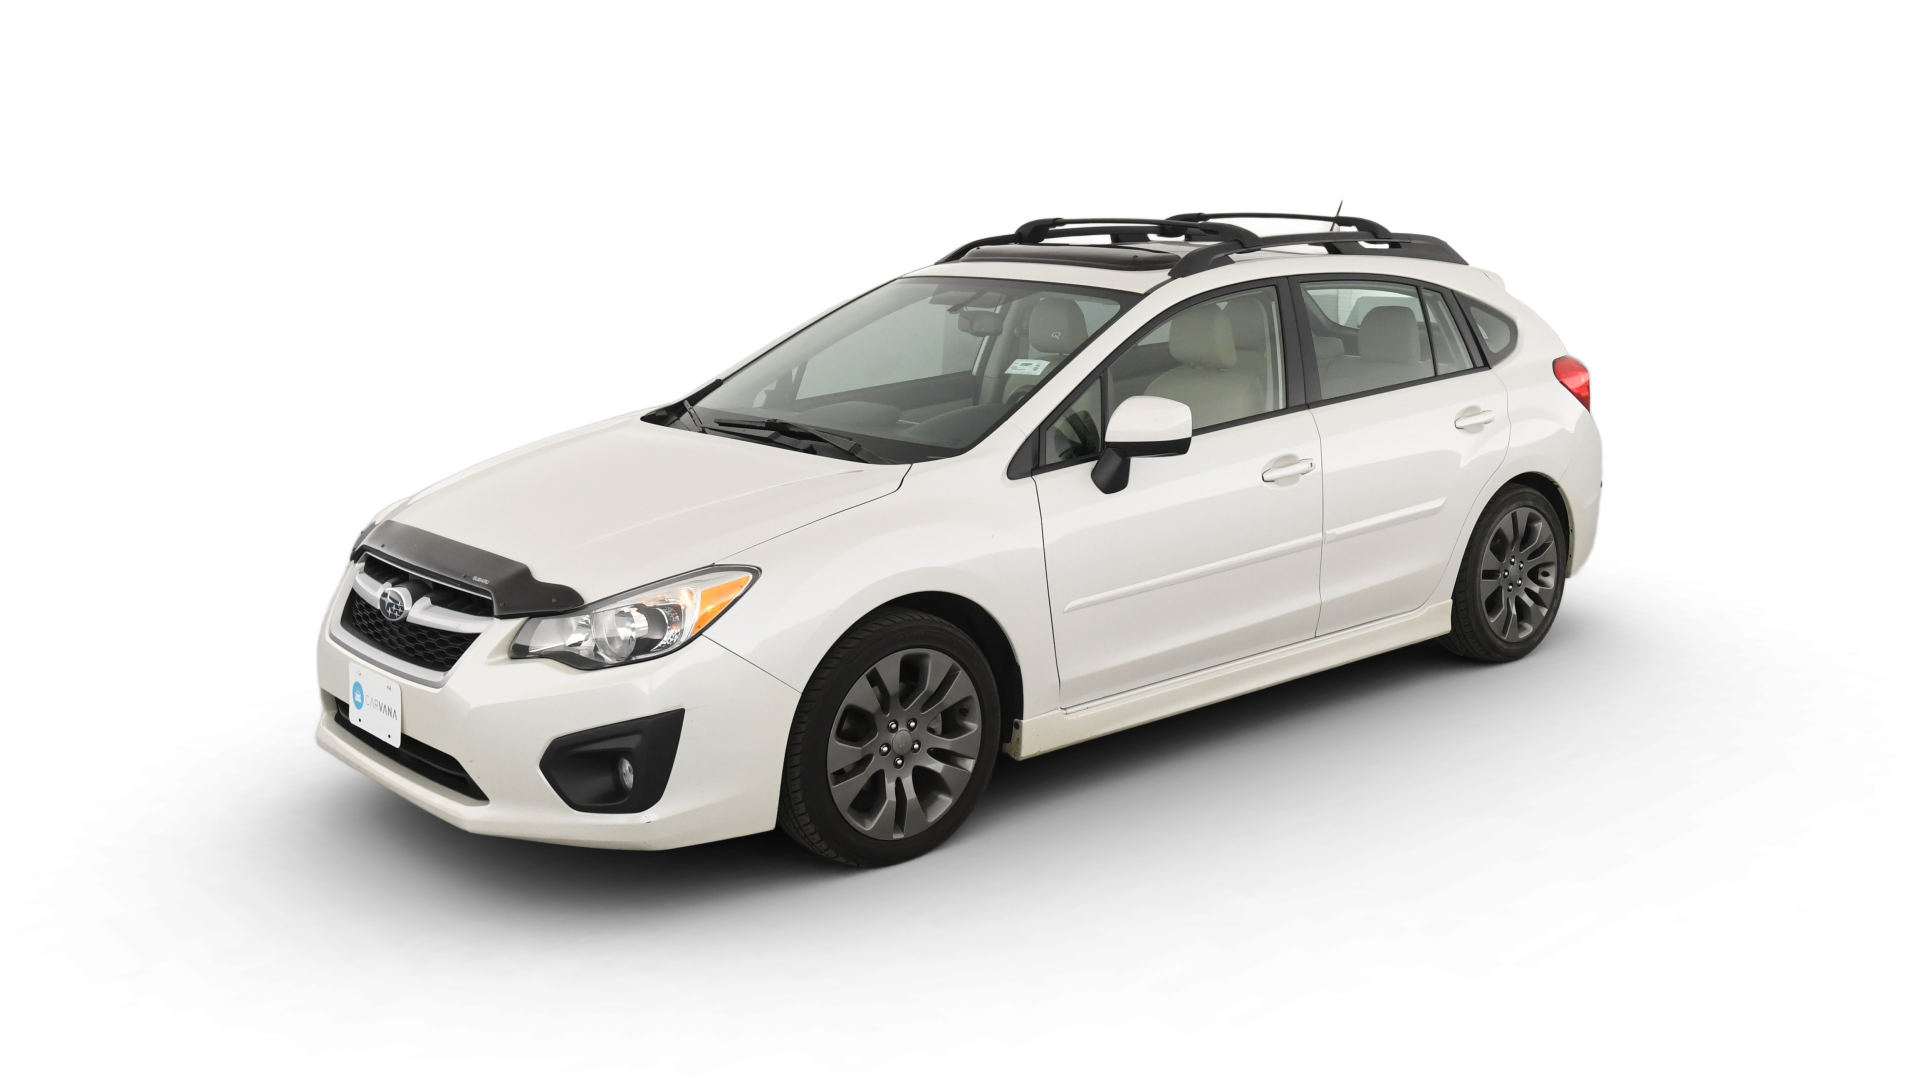 Subaru Impreza model image.